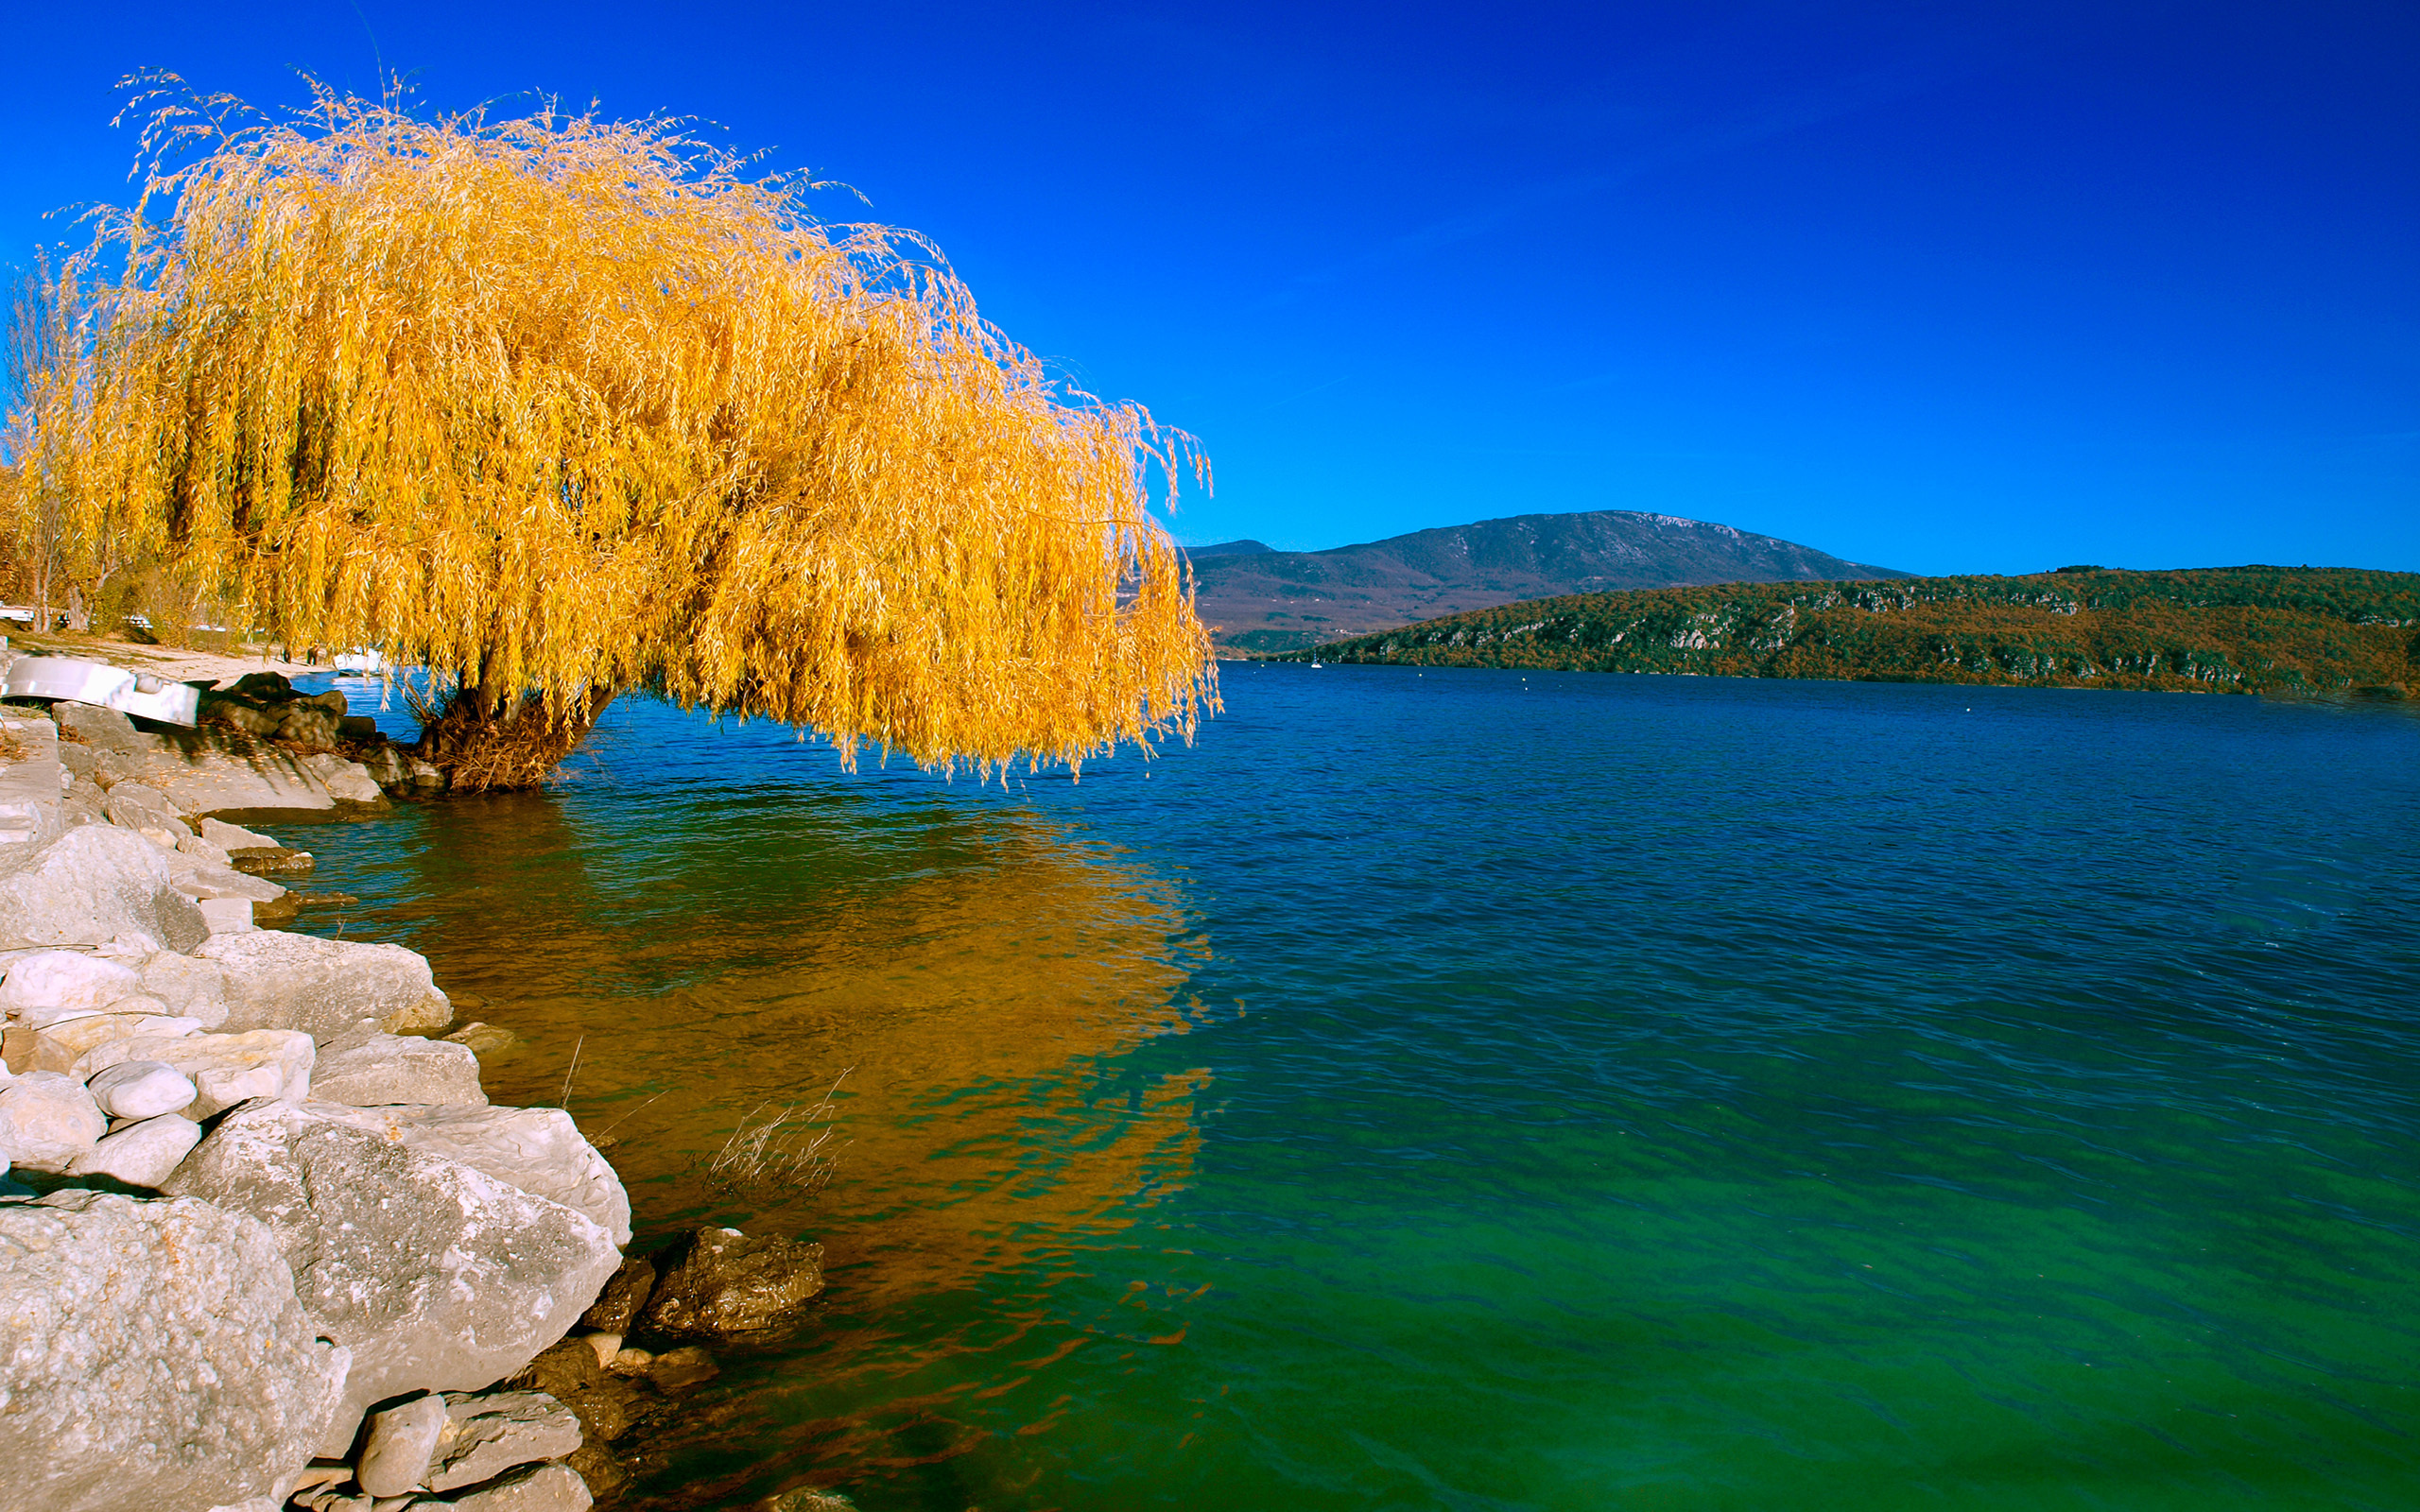 Willow Tree, Autumn beauty, Nature wallpaper, Desktop mobile tablet, 2560x1600 HD Desktop